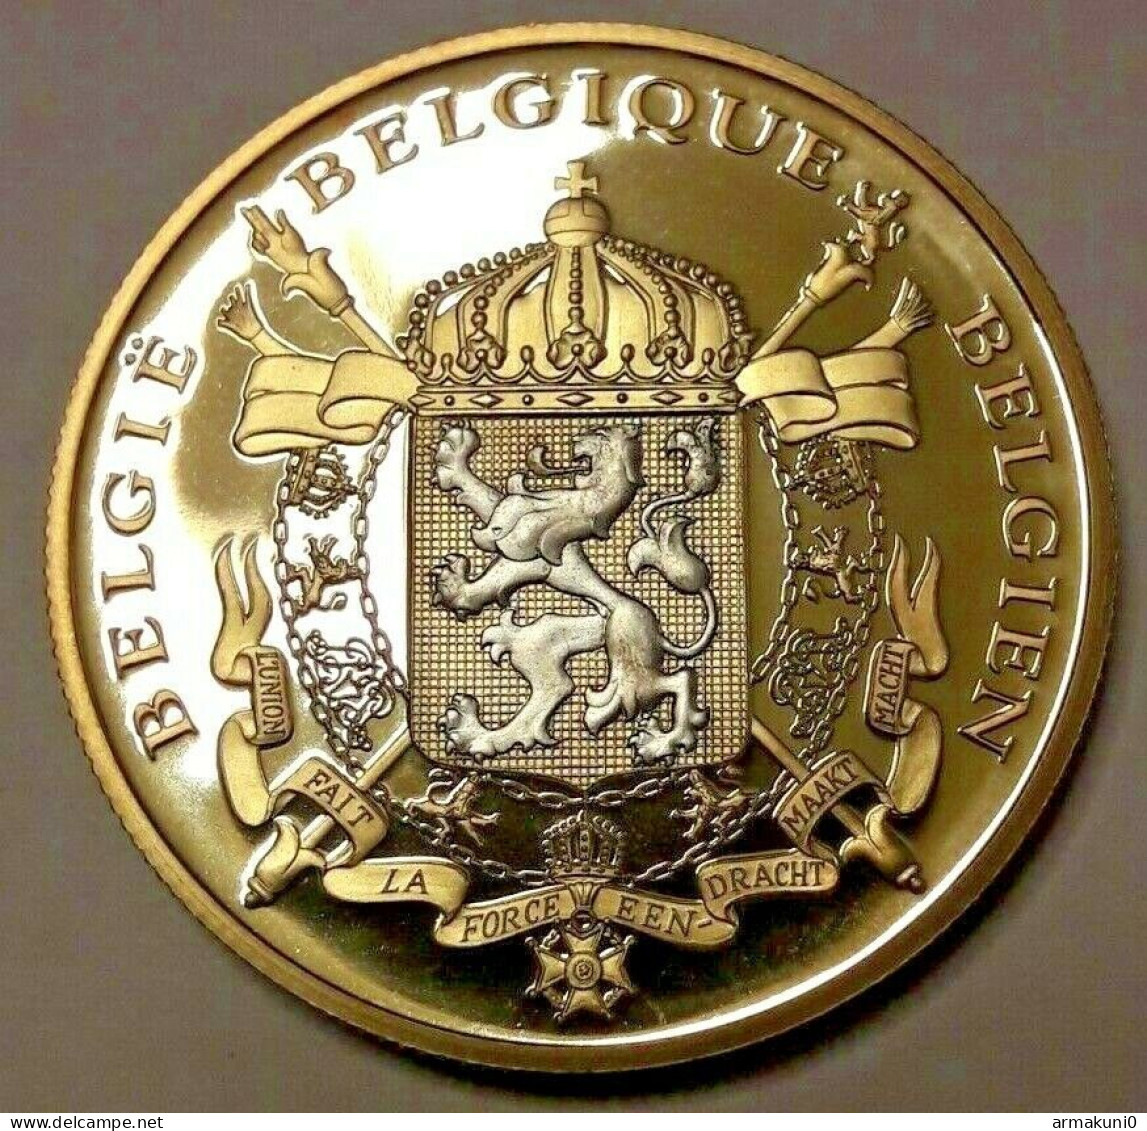 Medaille Albert II Belgarum Reges 2013 Philippe L'abdication Du Roi Albert II - Adel